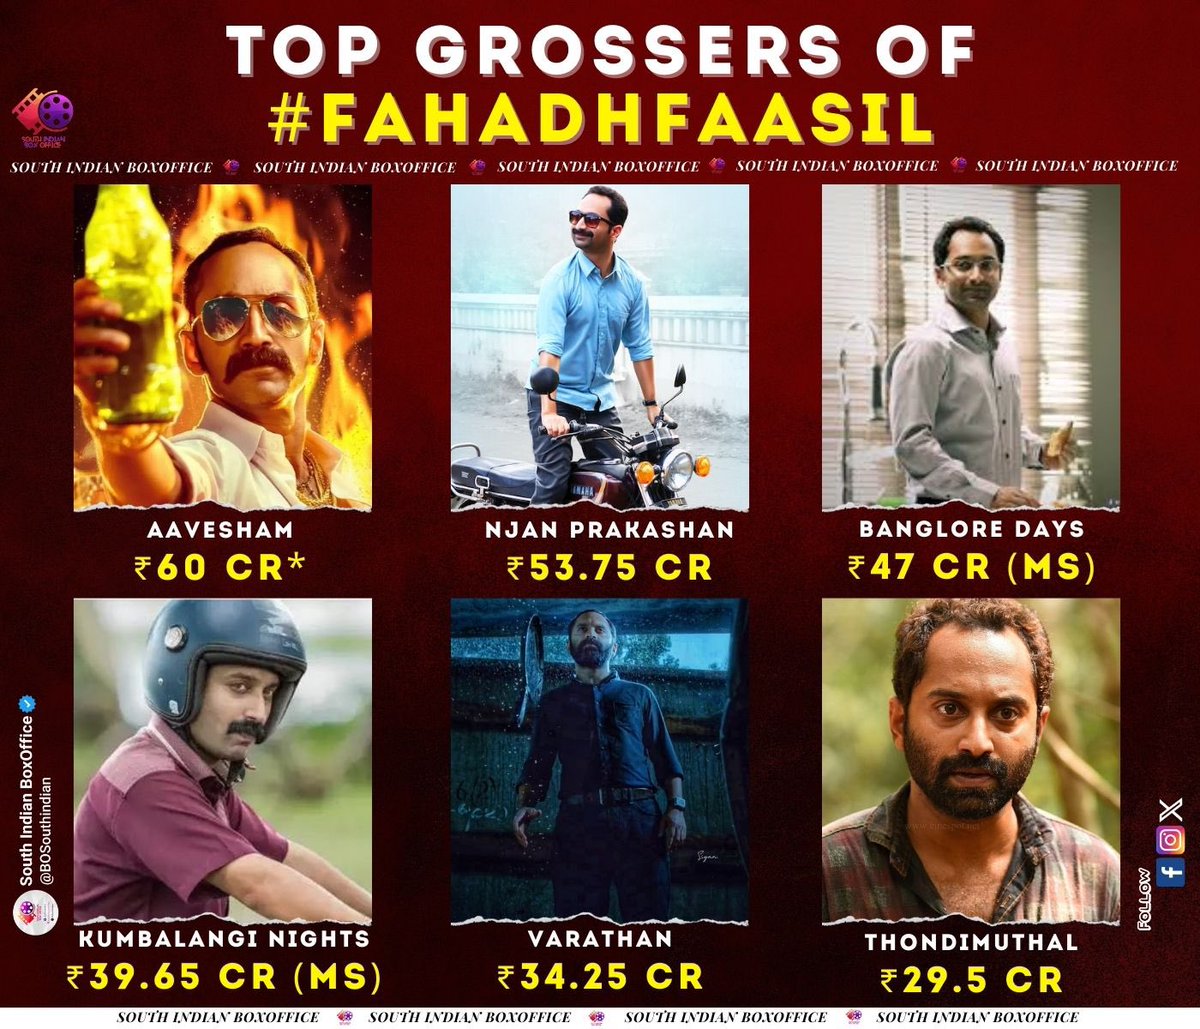 Top Worldwide Grossers of #FahadhFaasil - Malayalam Movies 

1 #Aavesham - ₹60 CR* (7 Days)
2 #NjanPrakashan - ₹53.75 CR
3 #Bangloredays - ₹47 CR (MS)
4 #Kumbalanginights - ₹39.65 CR (MS)
5 #Varathan - ₹34.25 CR
6 #Thondimuthal - ₹29.5 CR

*MS - MultiStar